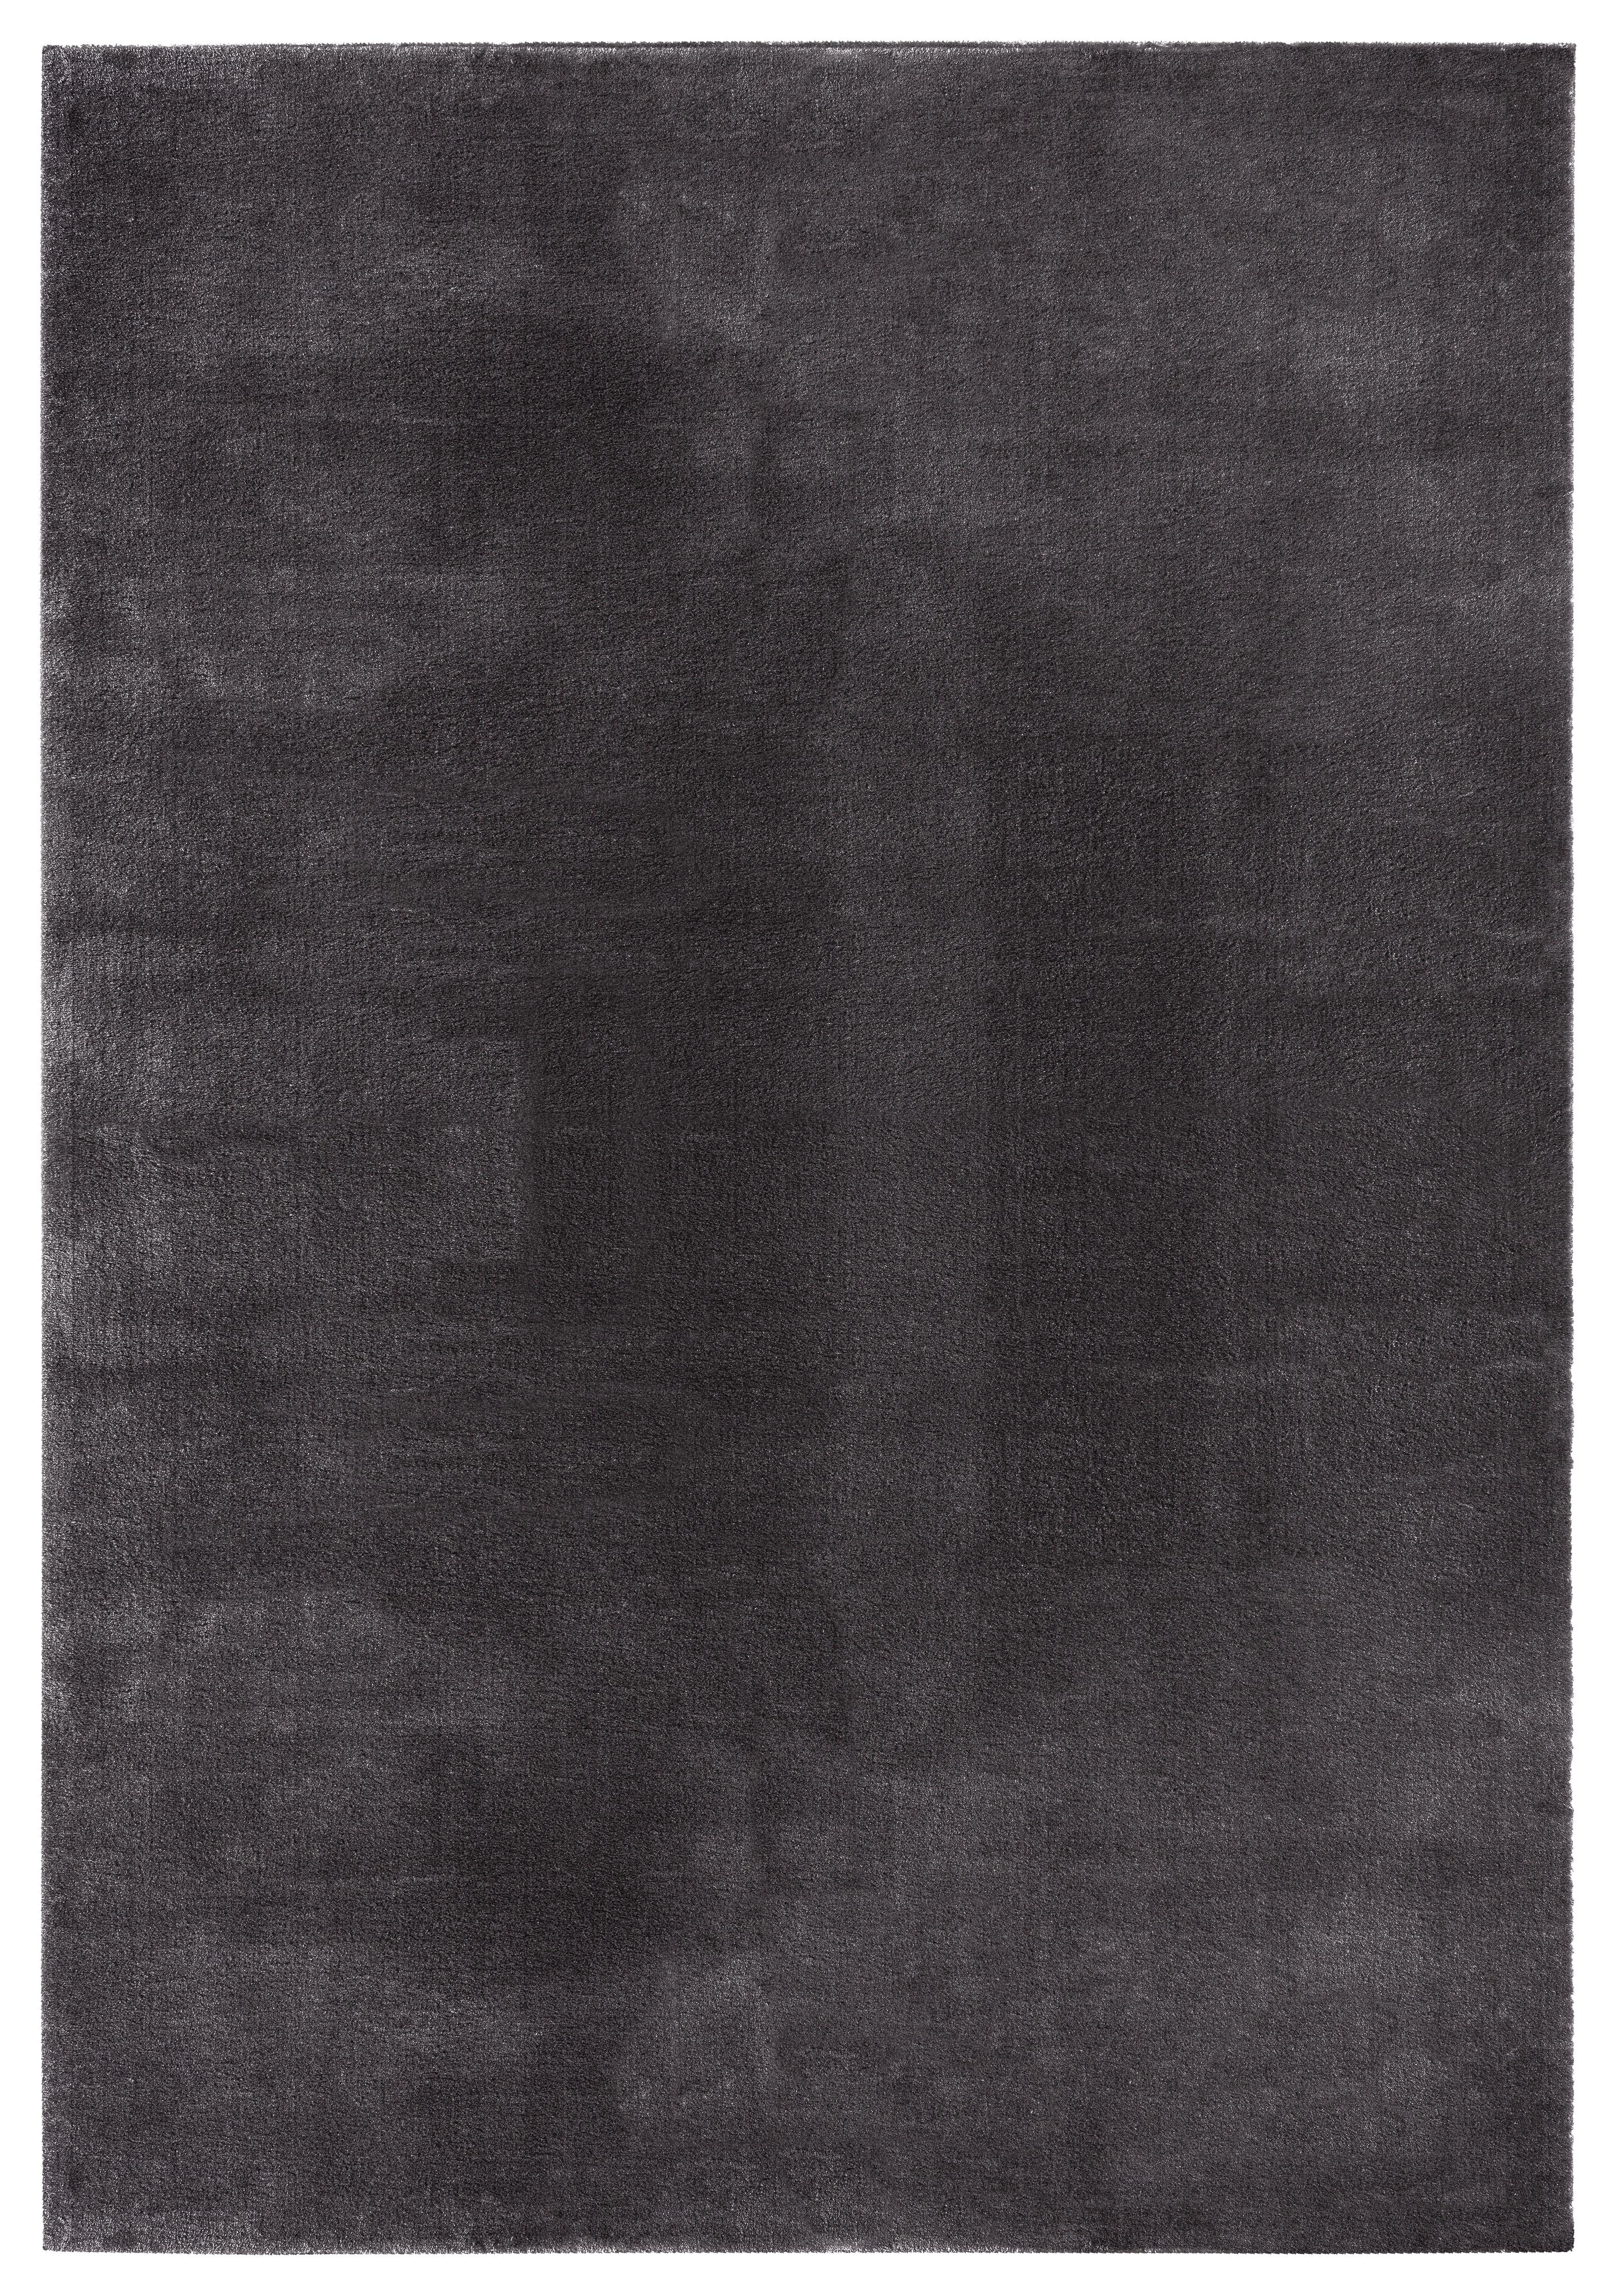 Fellteppich Melisander Anthrazit 100x150 cm - Anthrazit, Basics, Textil (100/150cm) - Luca Bessoni